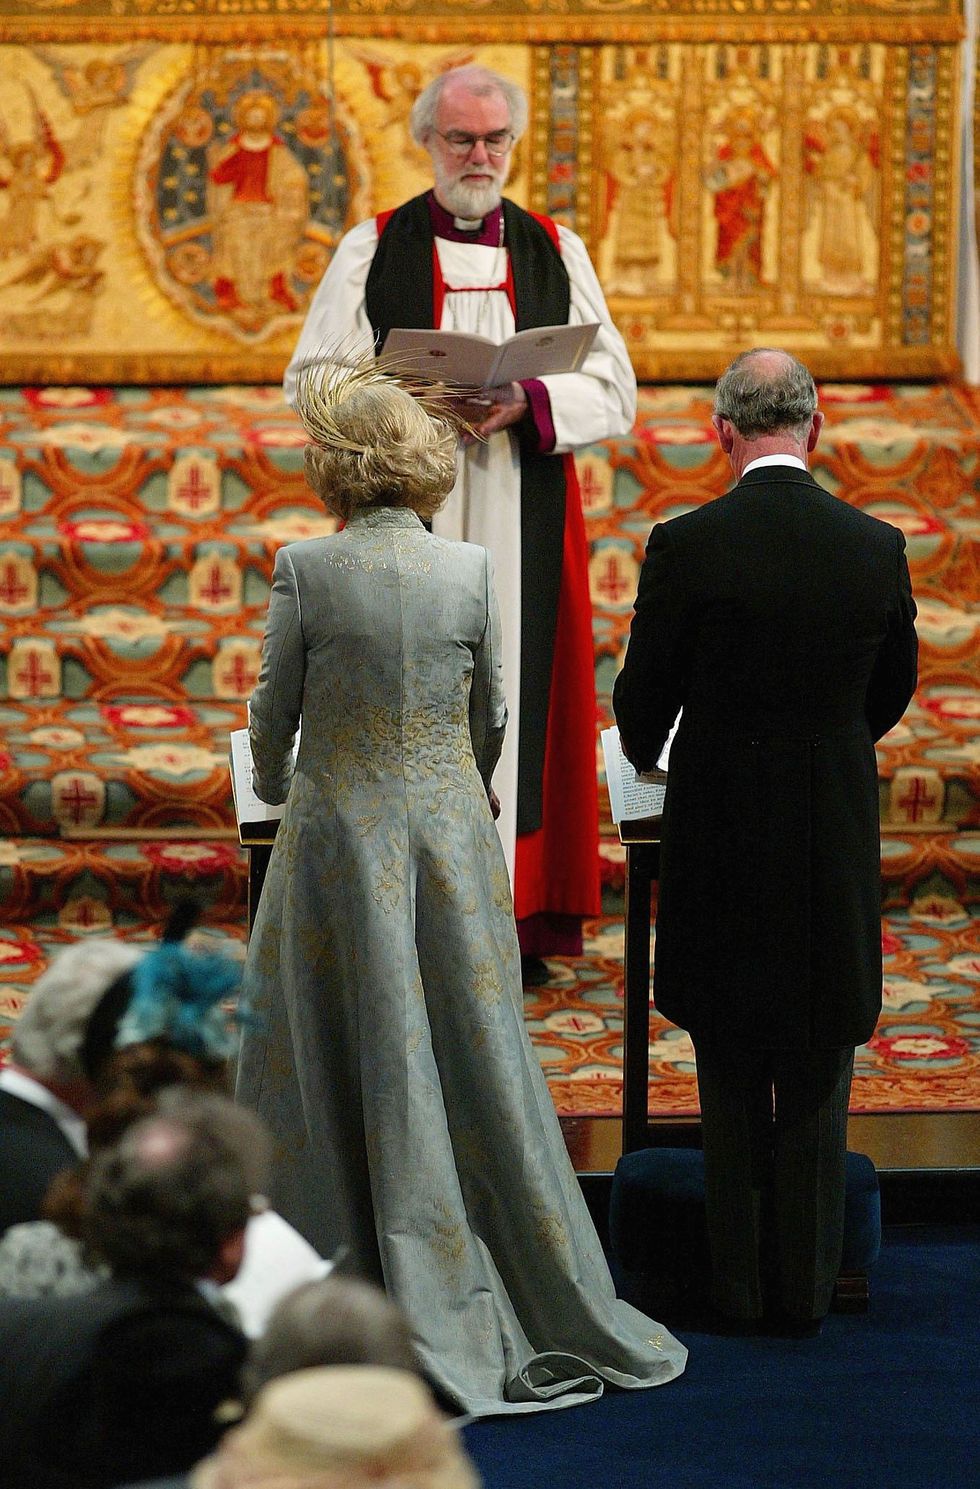 Prince Charles and Camilla's Wedding Day